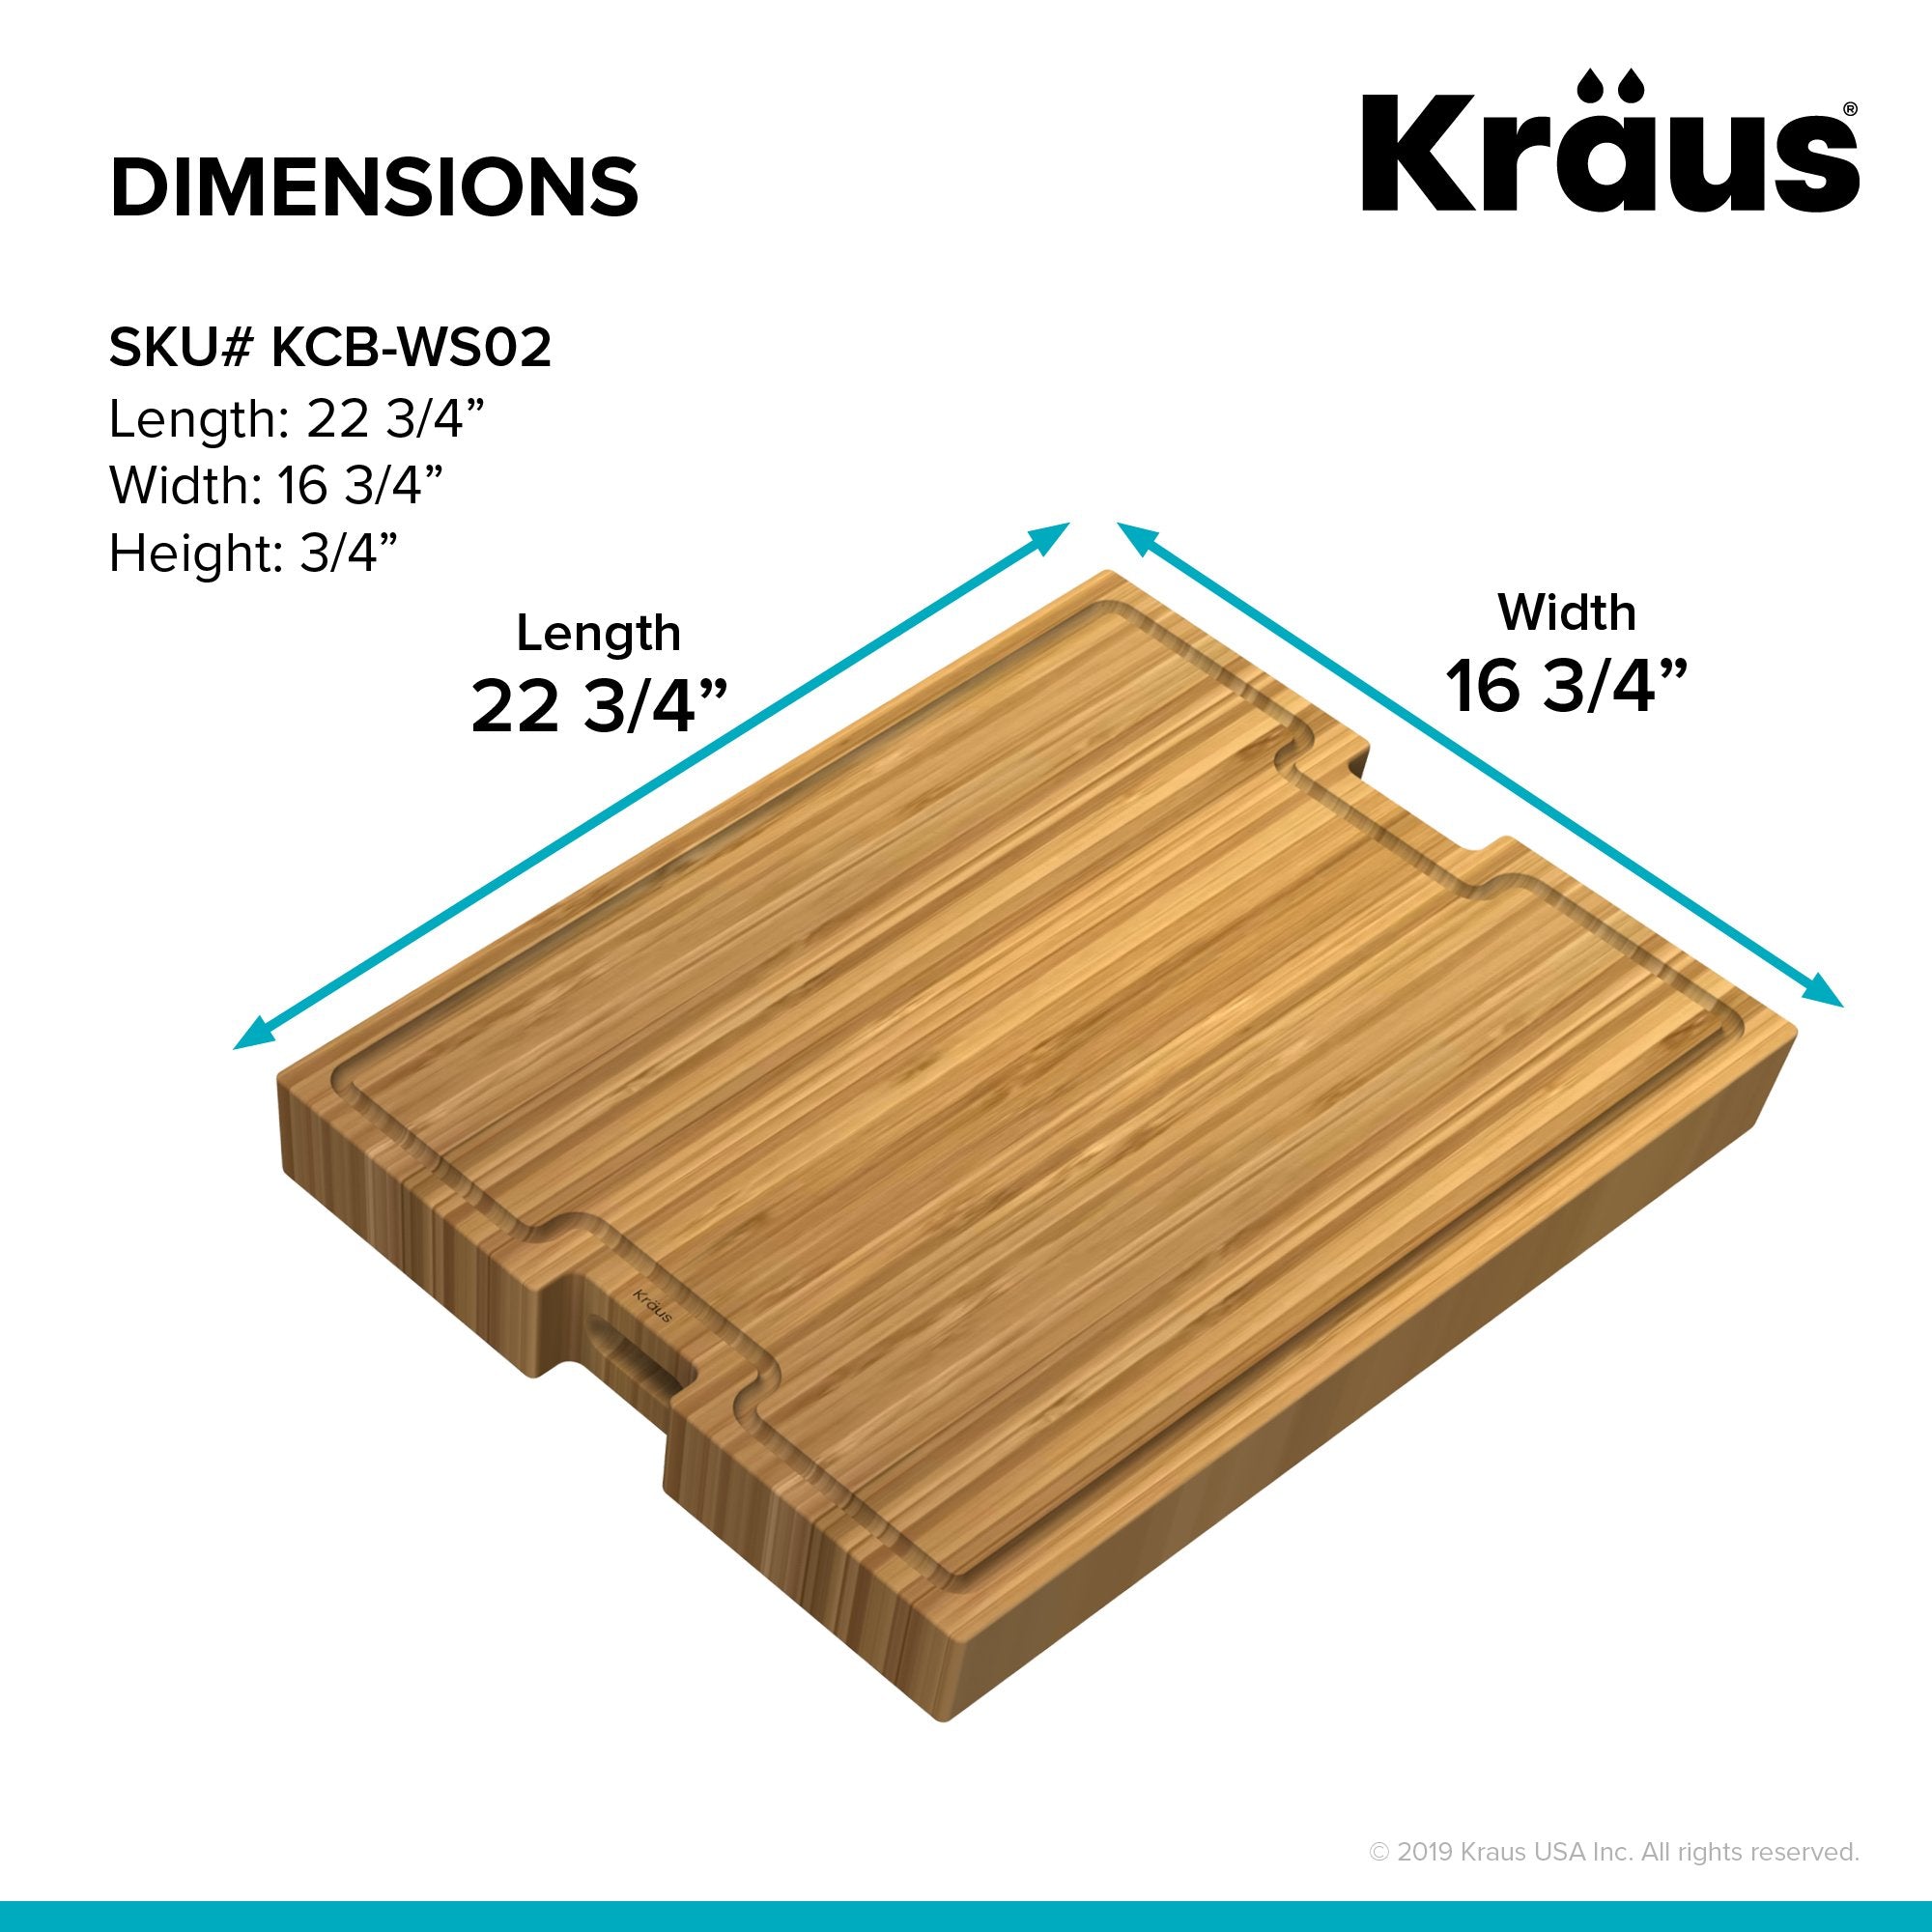 Kraus USA, Accessories, Cutting Boards